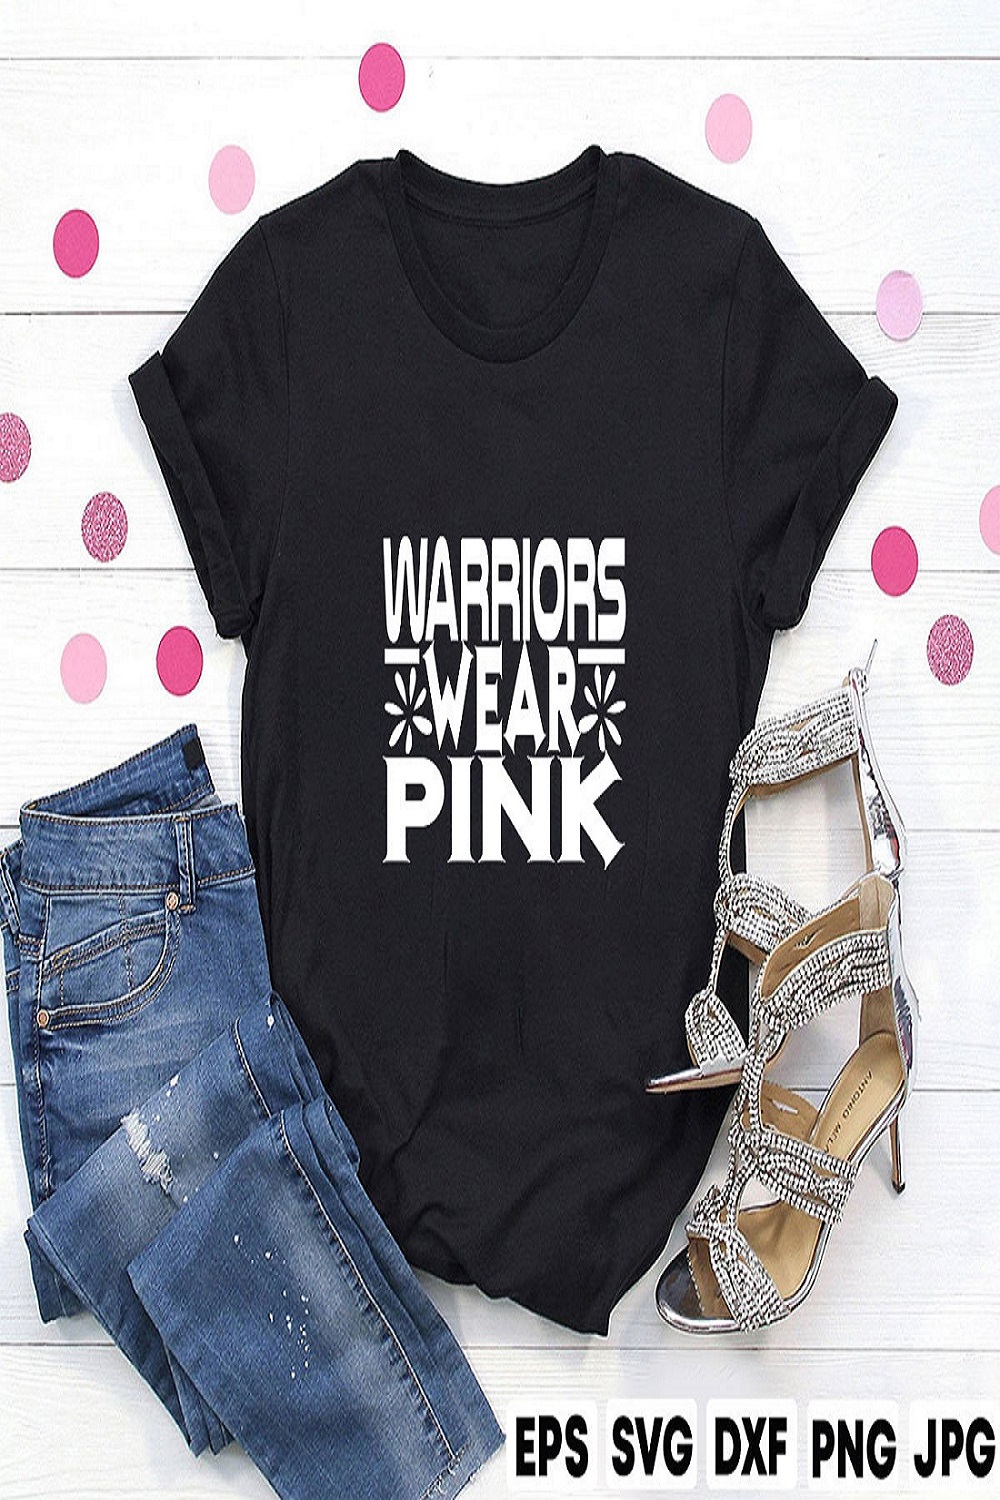 Warriors Wear pink pinterest preview image.